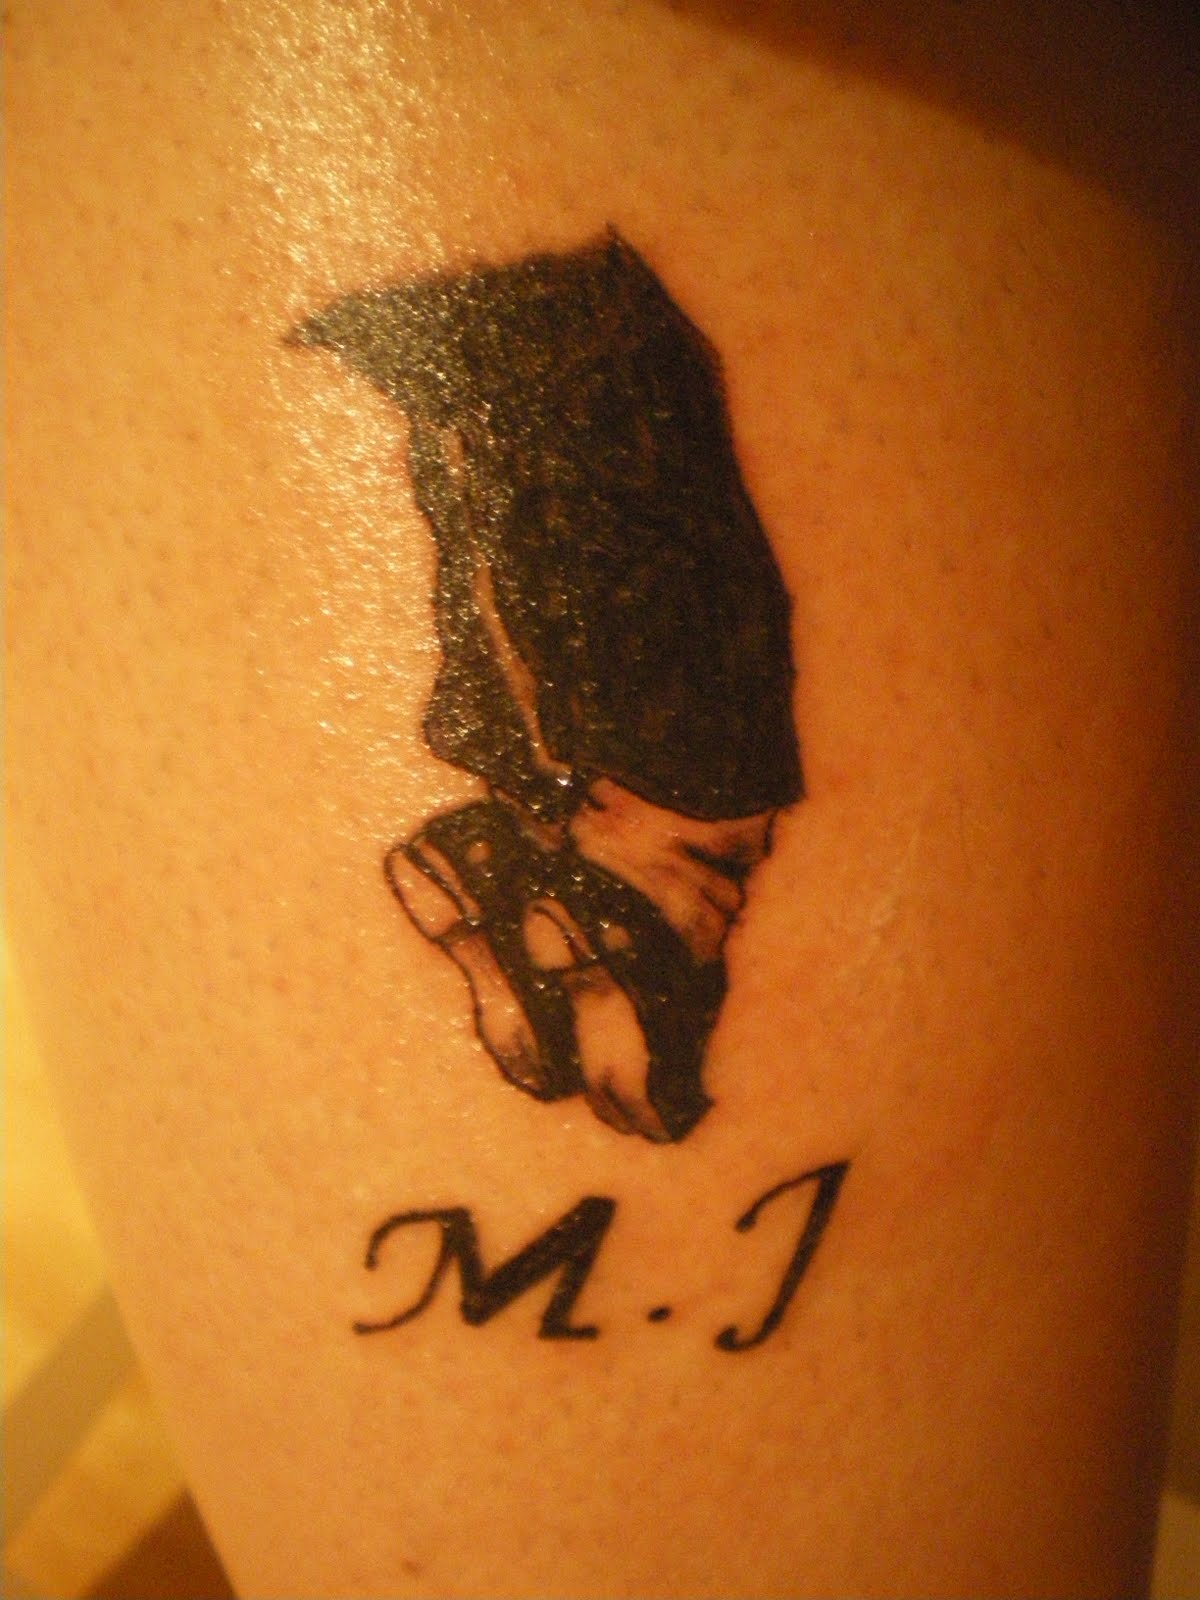 http://2.bp.blogspot.com/_u_Dw9Bwo8nQ/S8oIdj_nRXI/AAAAAAAAAFI/SuOka_Qcuys/s1600/Michael+Jackson+tattoo.JPG